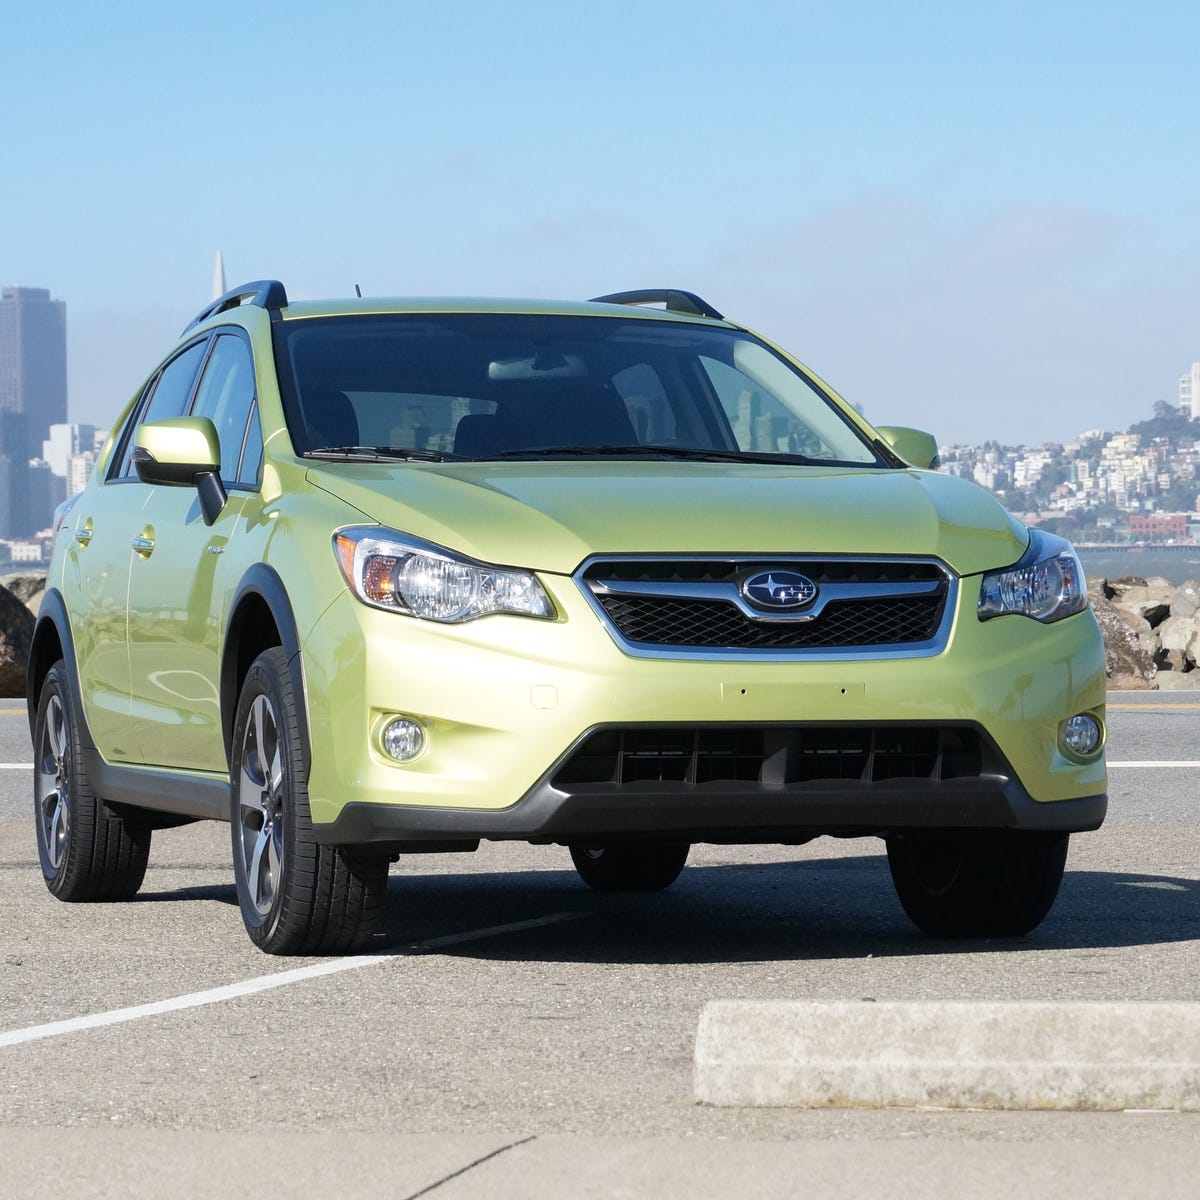 2014 Subaru XV Crosstrek Hybrid review: Subaru's first hybrid vehicle has  us asking, 'What's the point?' - CNET